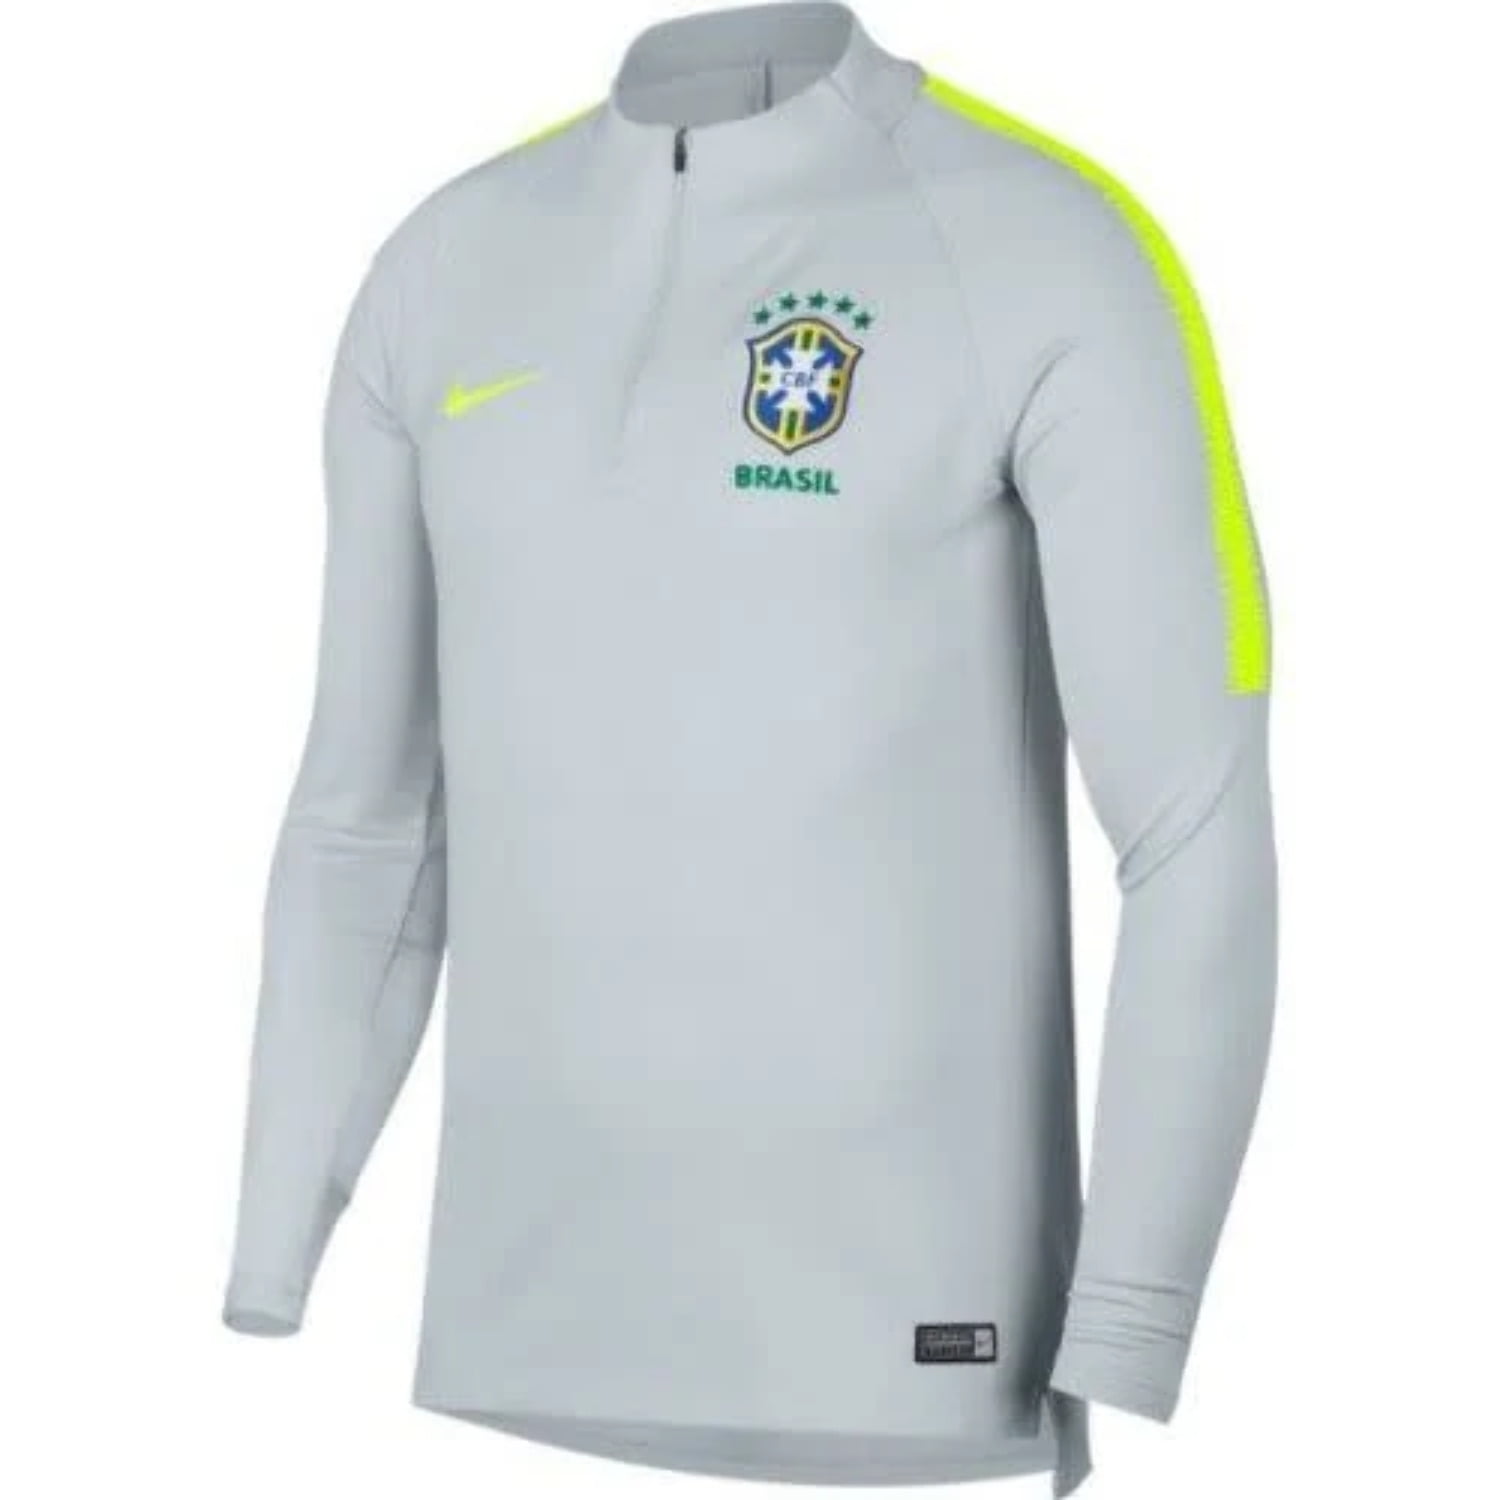 kiwi lo hizo Mente Nike Brazil Brasil WC World Cup 2018 Soccer Training Top - Gray/Volt M -  Walmart.com